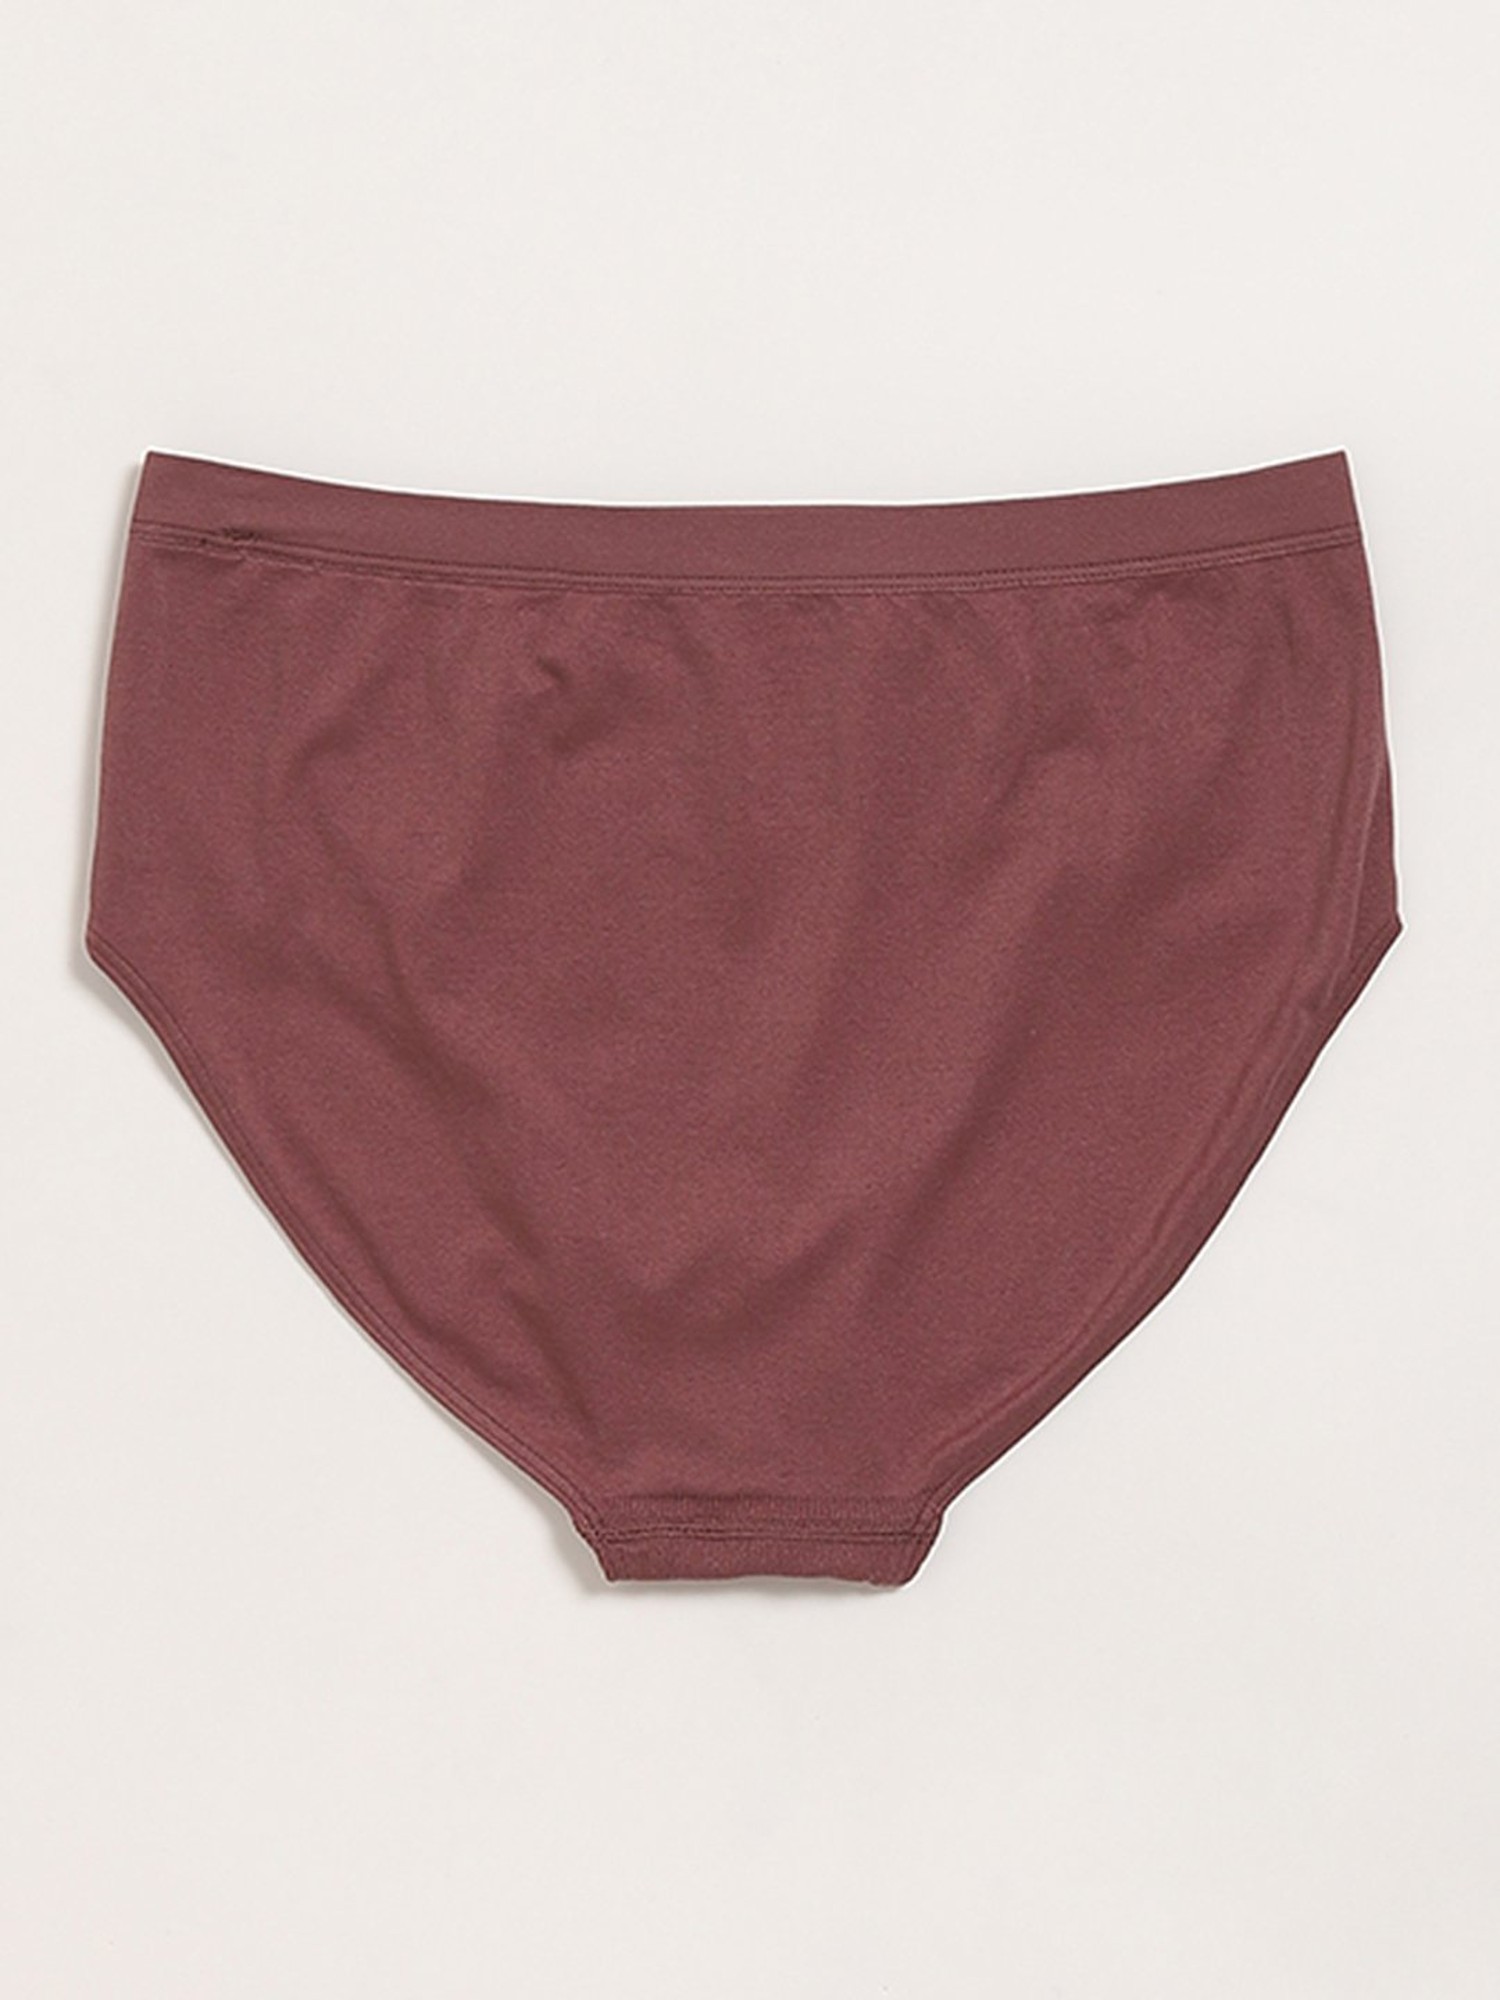 Buy Wunderlove Maroon Mid-Rise Self-Patterned Shorts from Westside